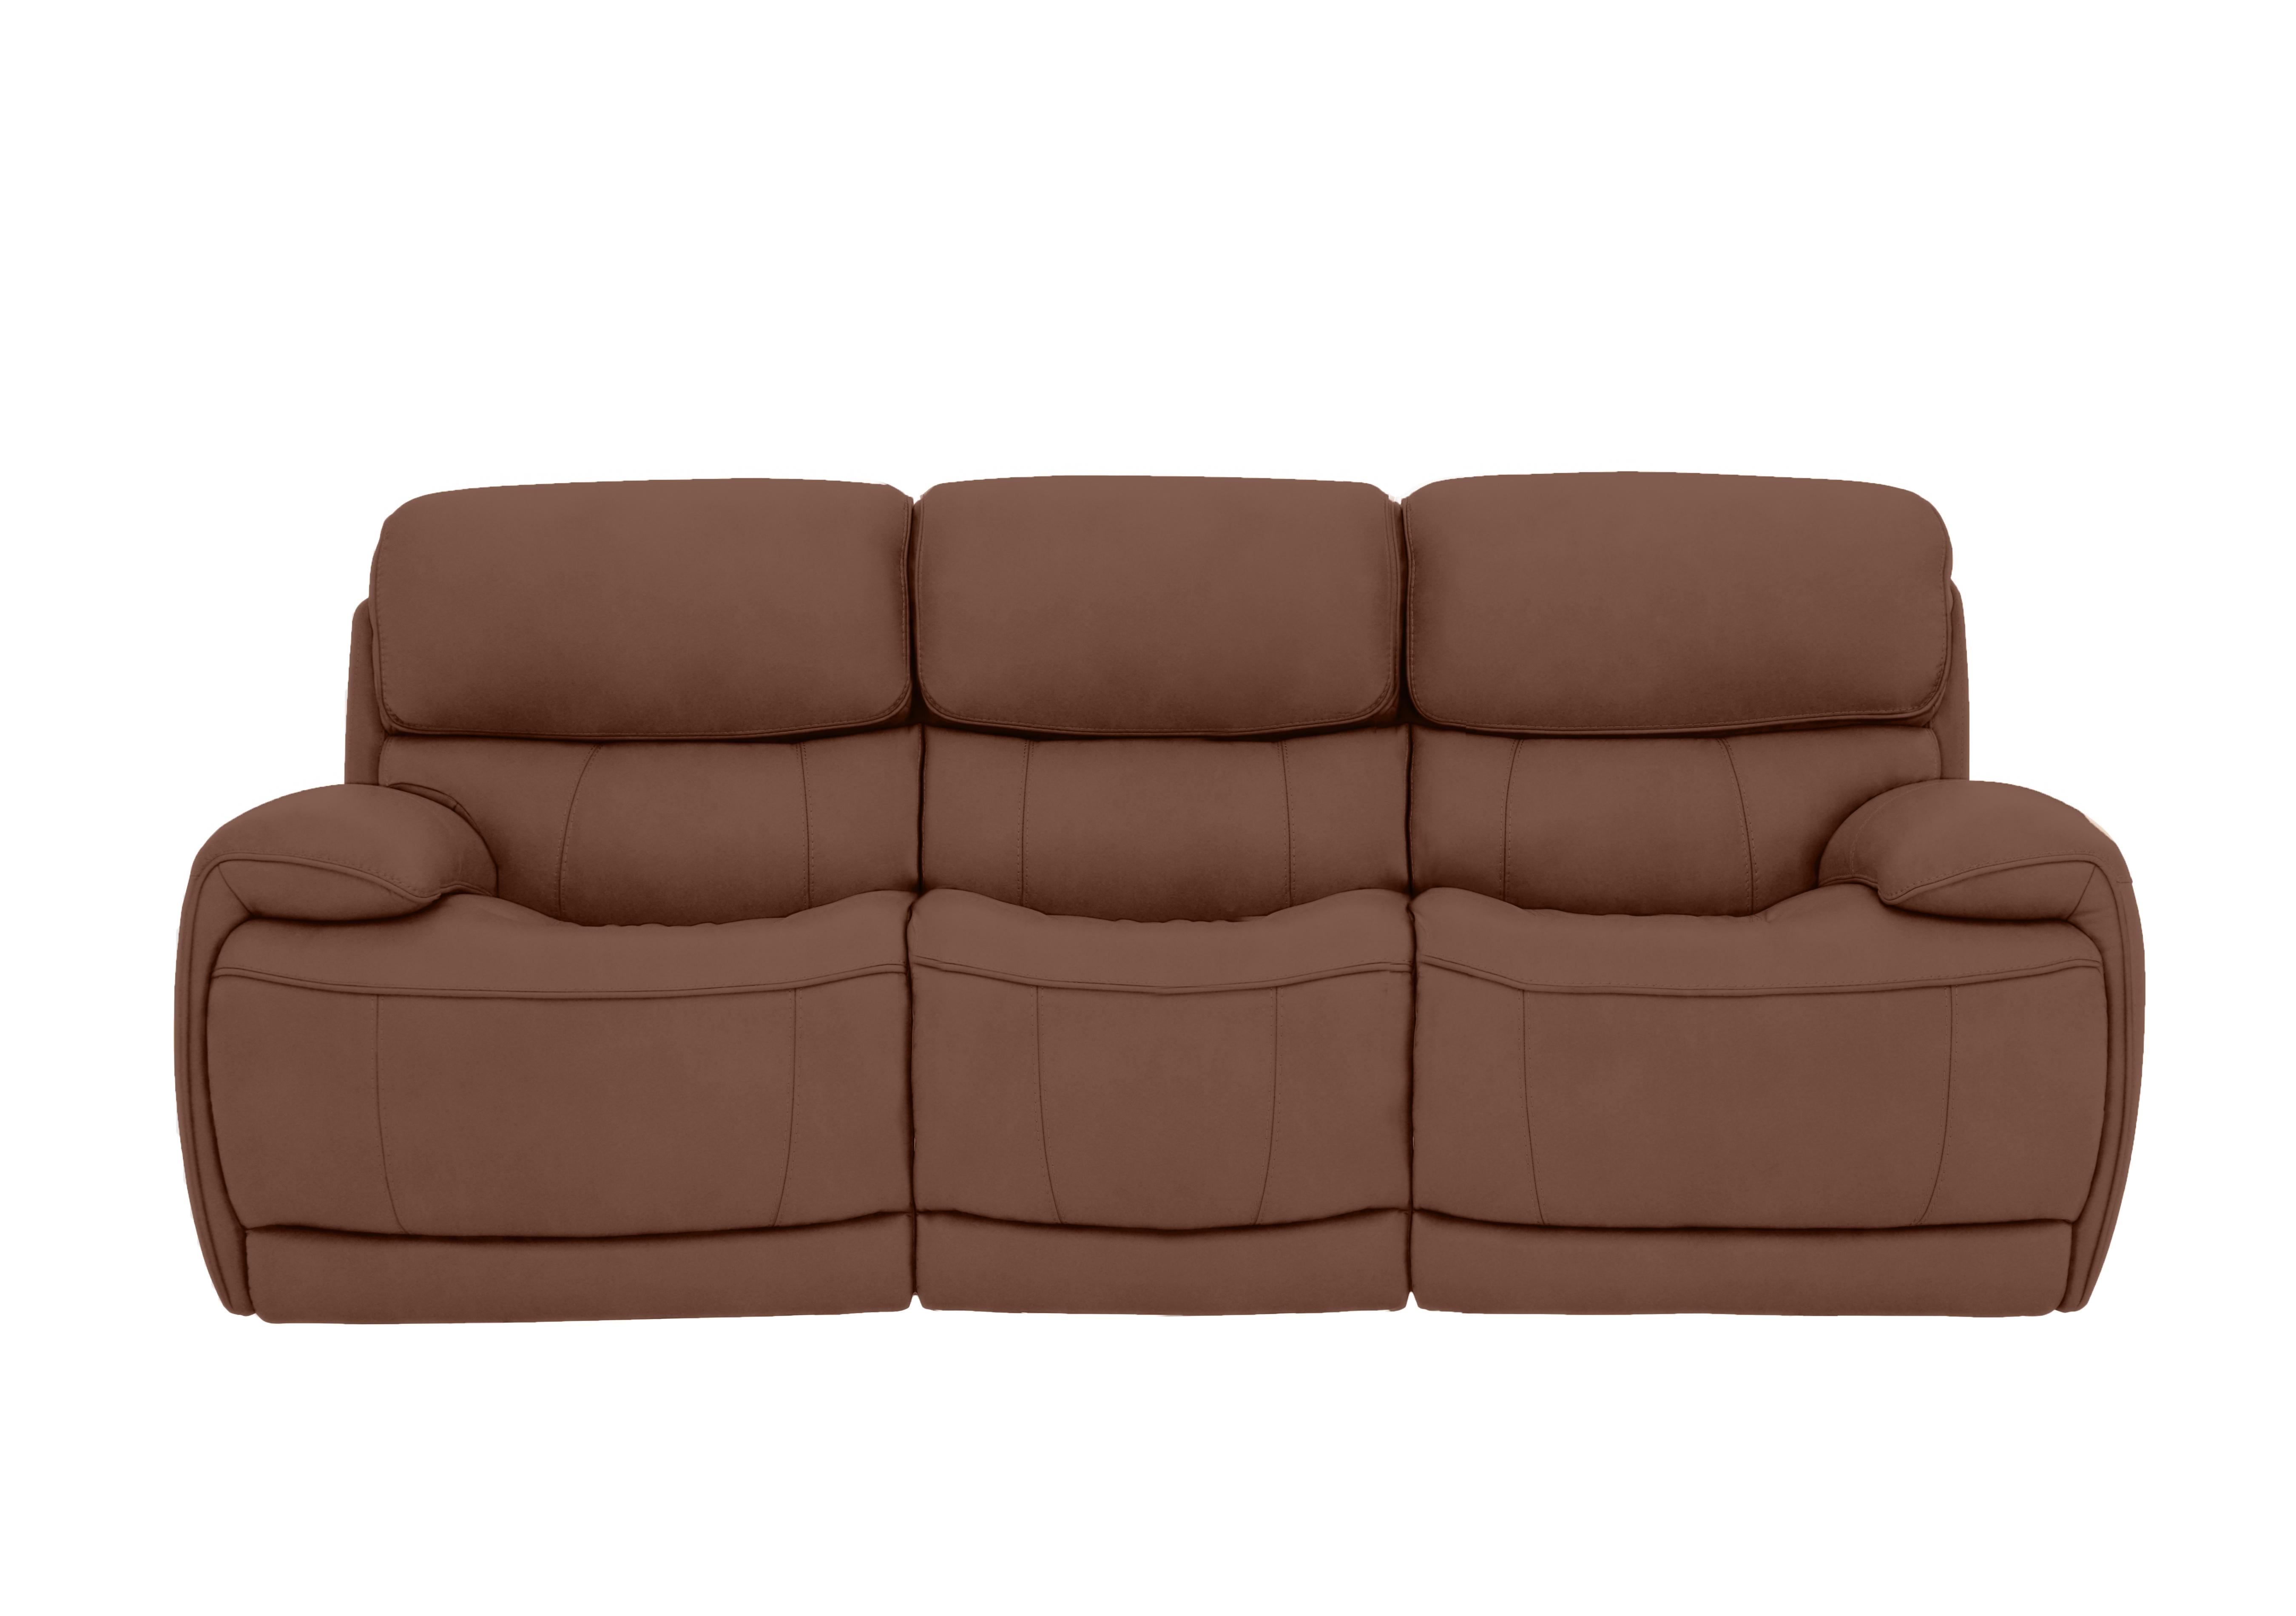 Rocco 3 Seater Fabric Power Rocker Sofa with Power Headrests in Bfa-Blj-R05 Hazelnut on Furniture Village